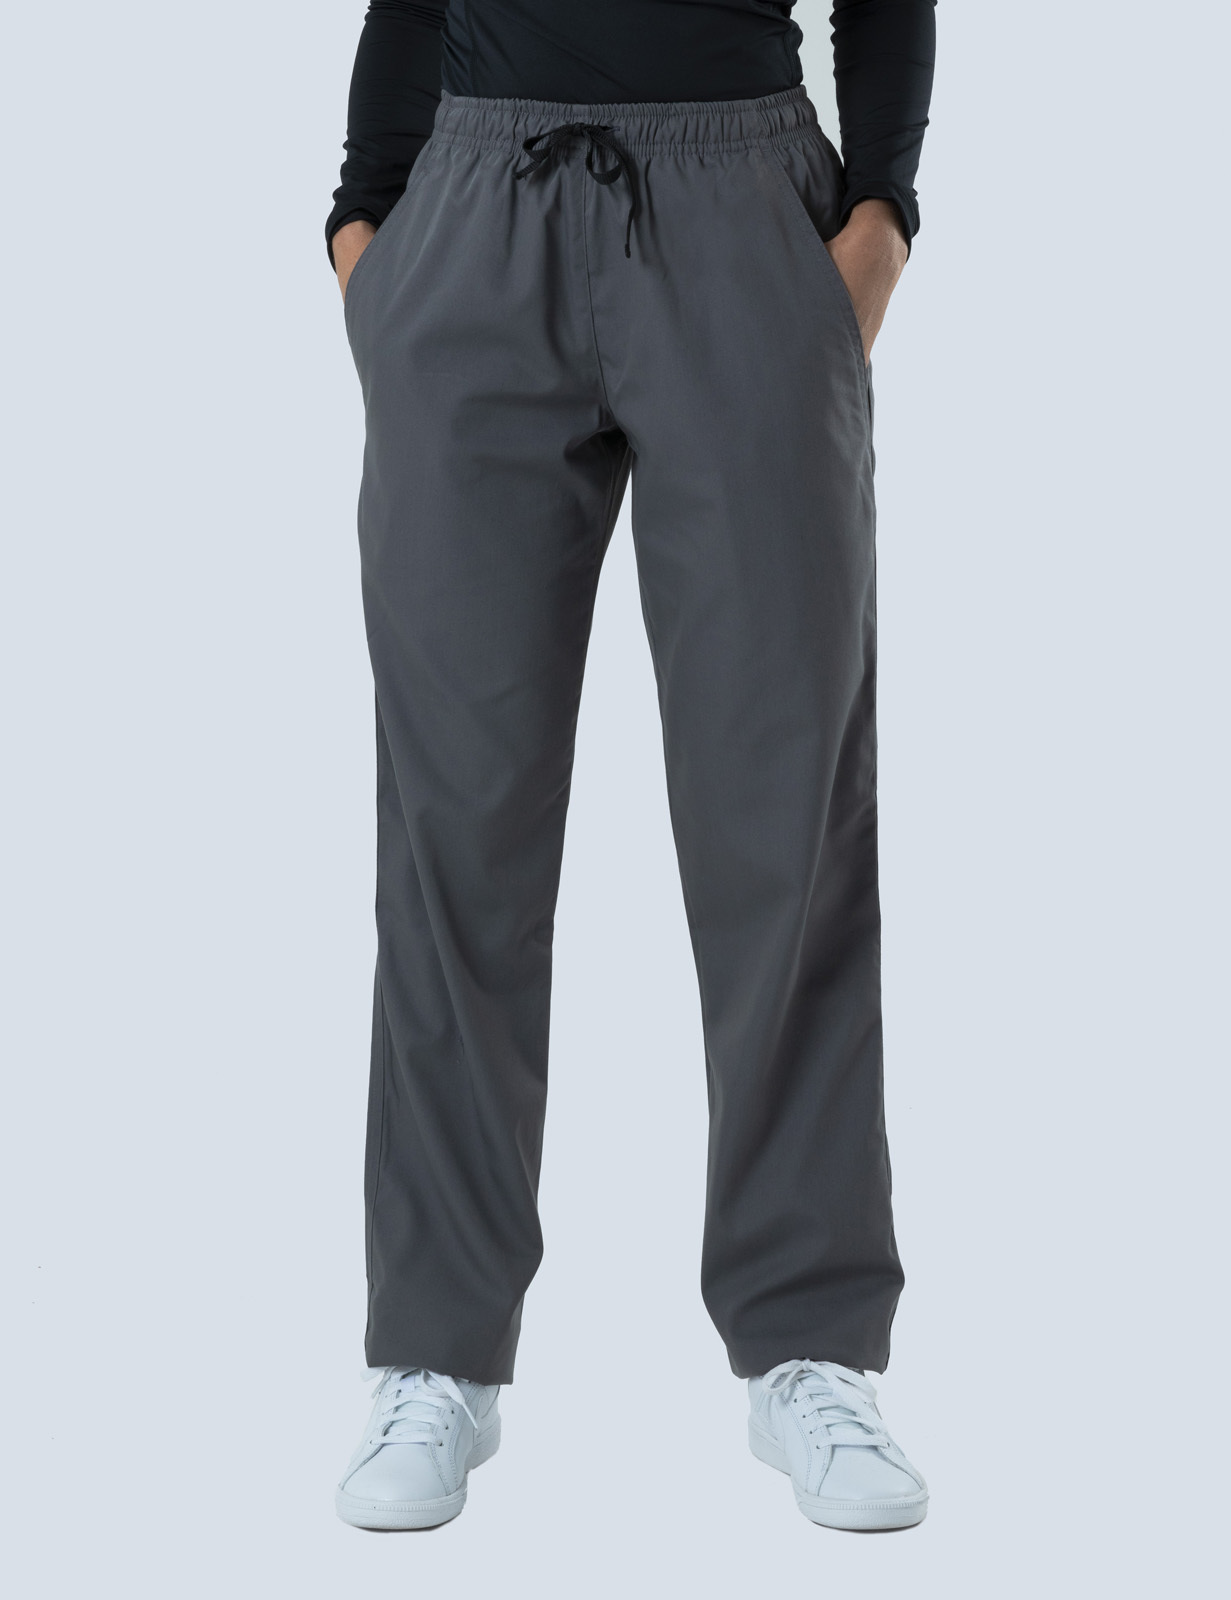 Women's Regular Cut Pants - Steel Grey - XX Small